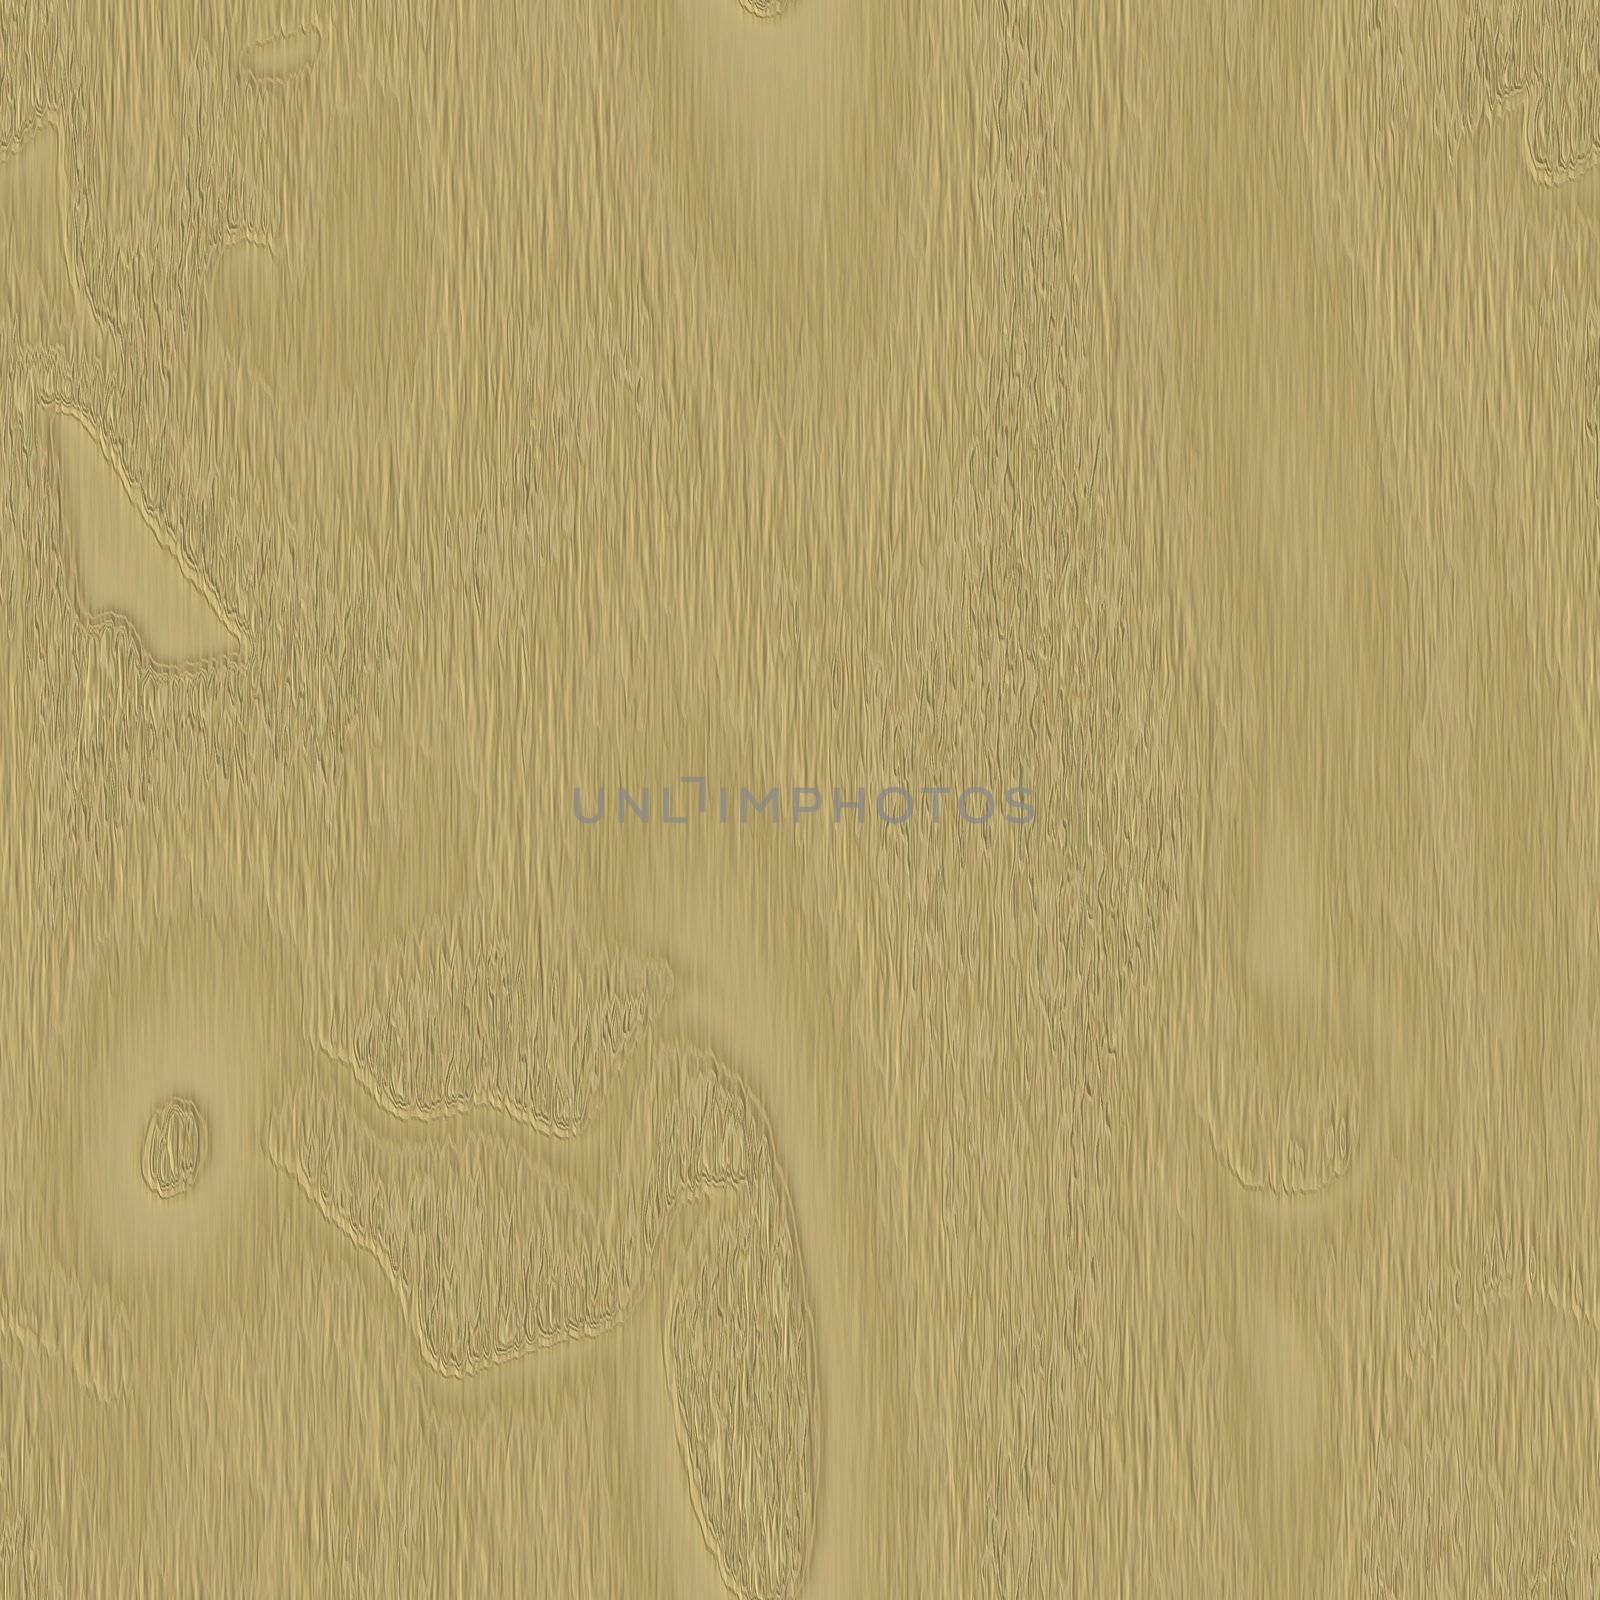 Wood Texture by kentoh